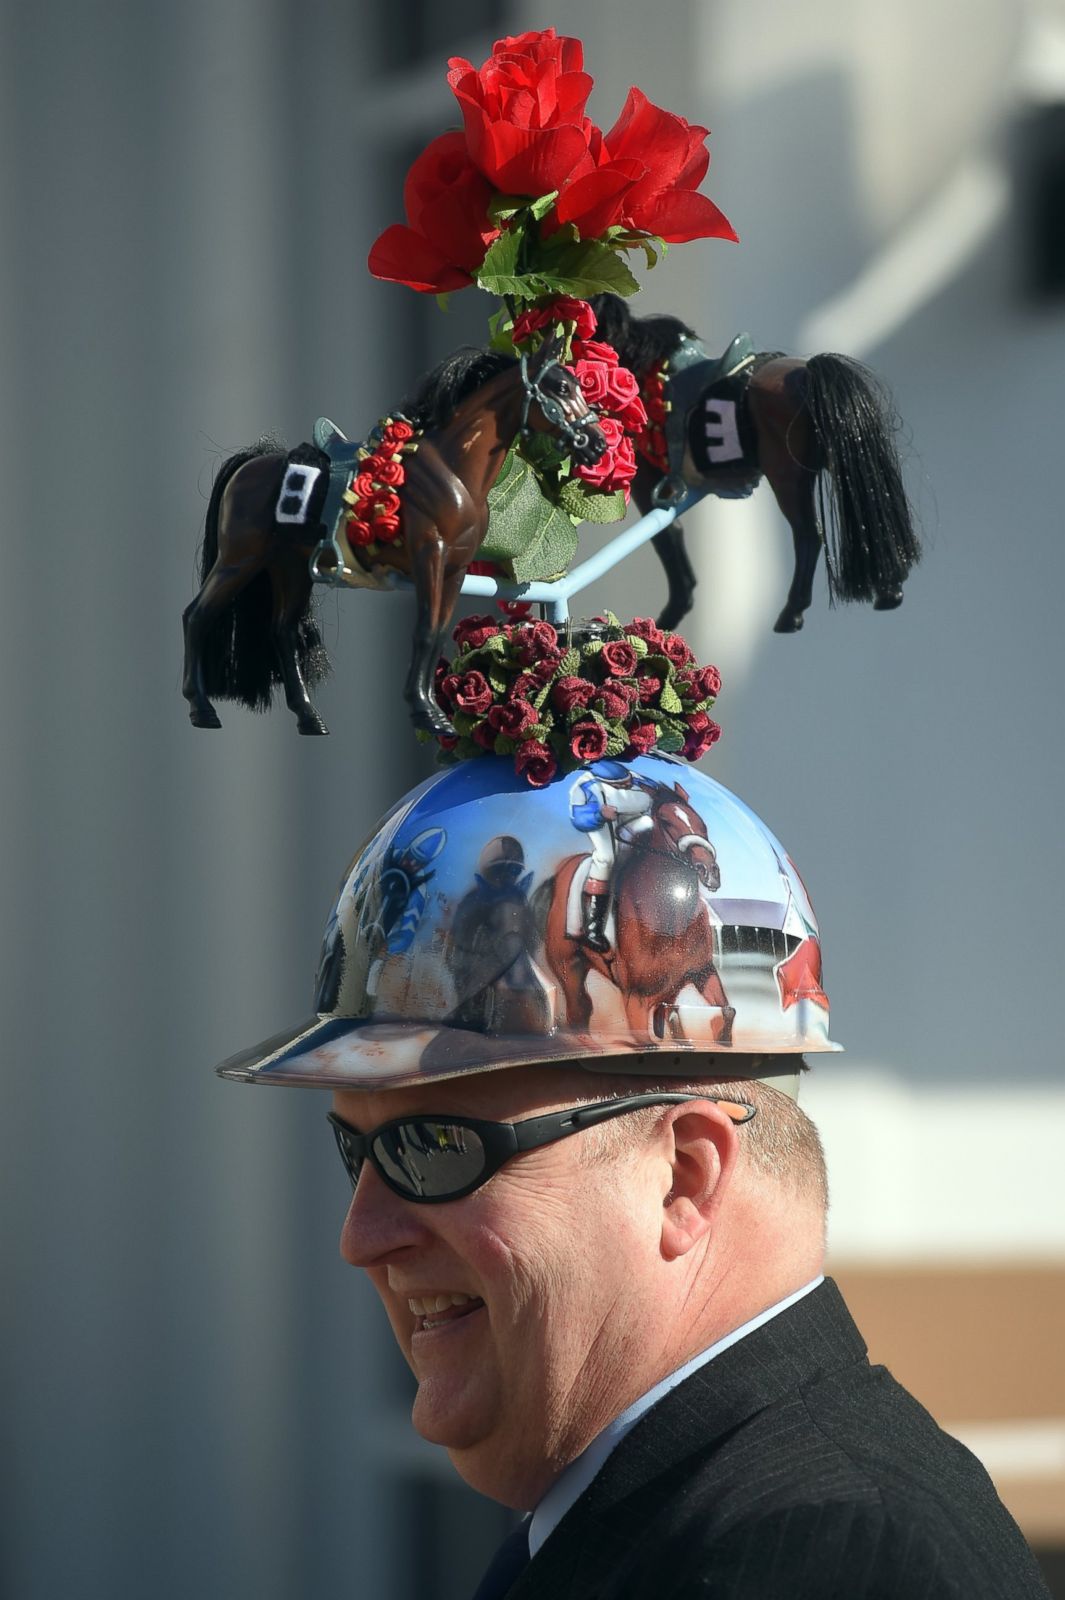 Kentucky Derby 2014 Craziest Hats and Best Dressed Celebrities Photos